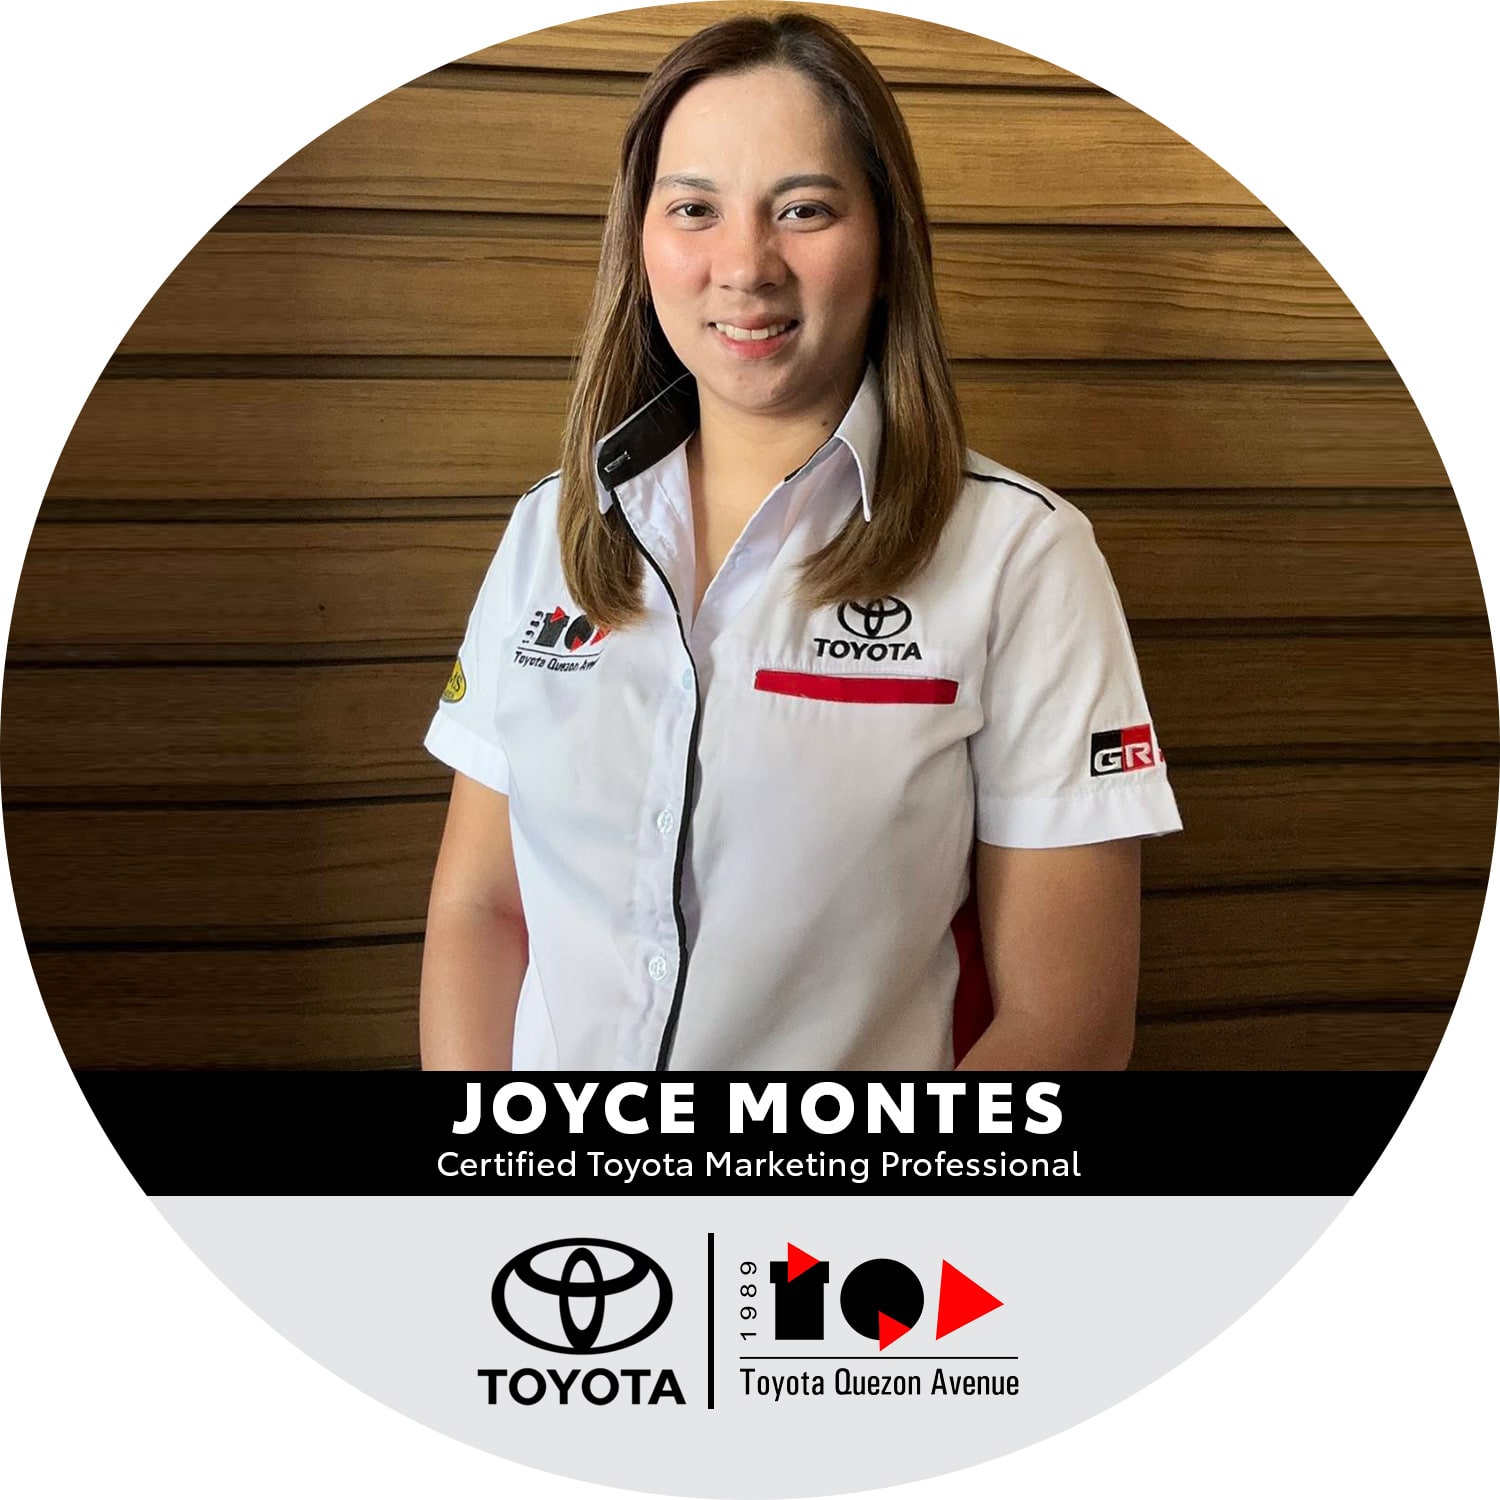 Certified Toyota Marketing Professionals - Joyce Montes